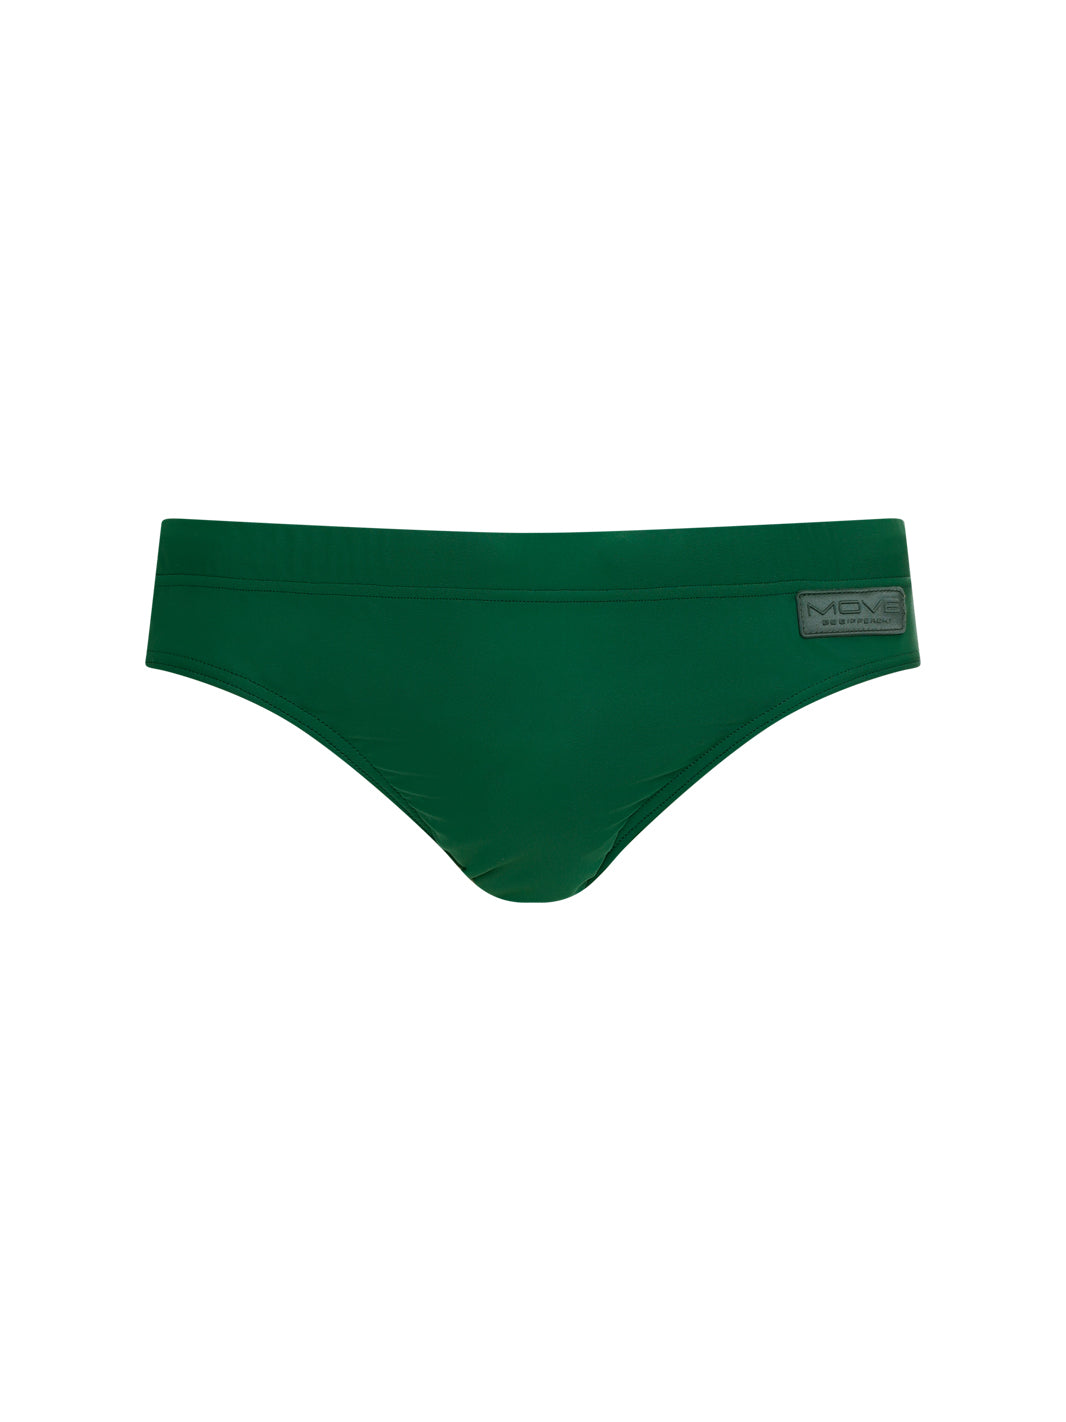 immagine-3-la-riviera-costume-slip-verde-beachwear-cuba-slip-verde